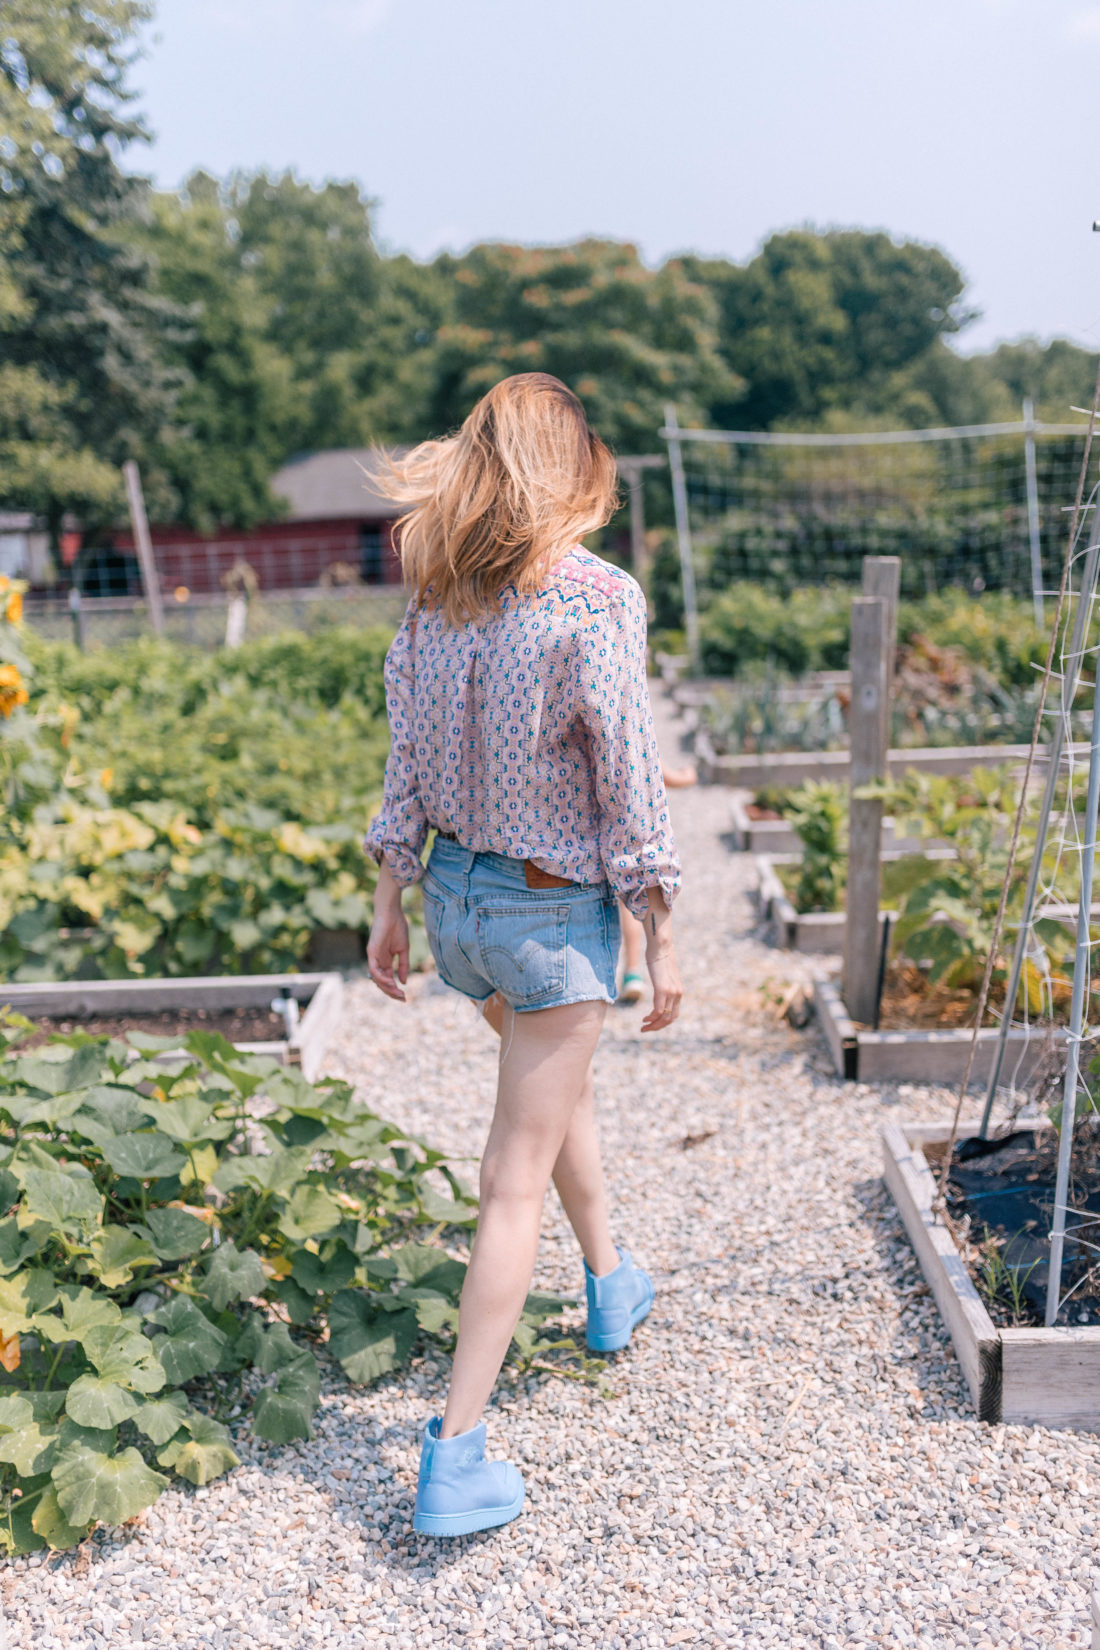 Eva Amurri Martino wears a silk blouse and denim cutoffs and walks through the vegetable garden of a local farm